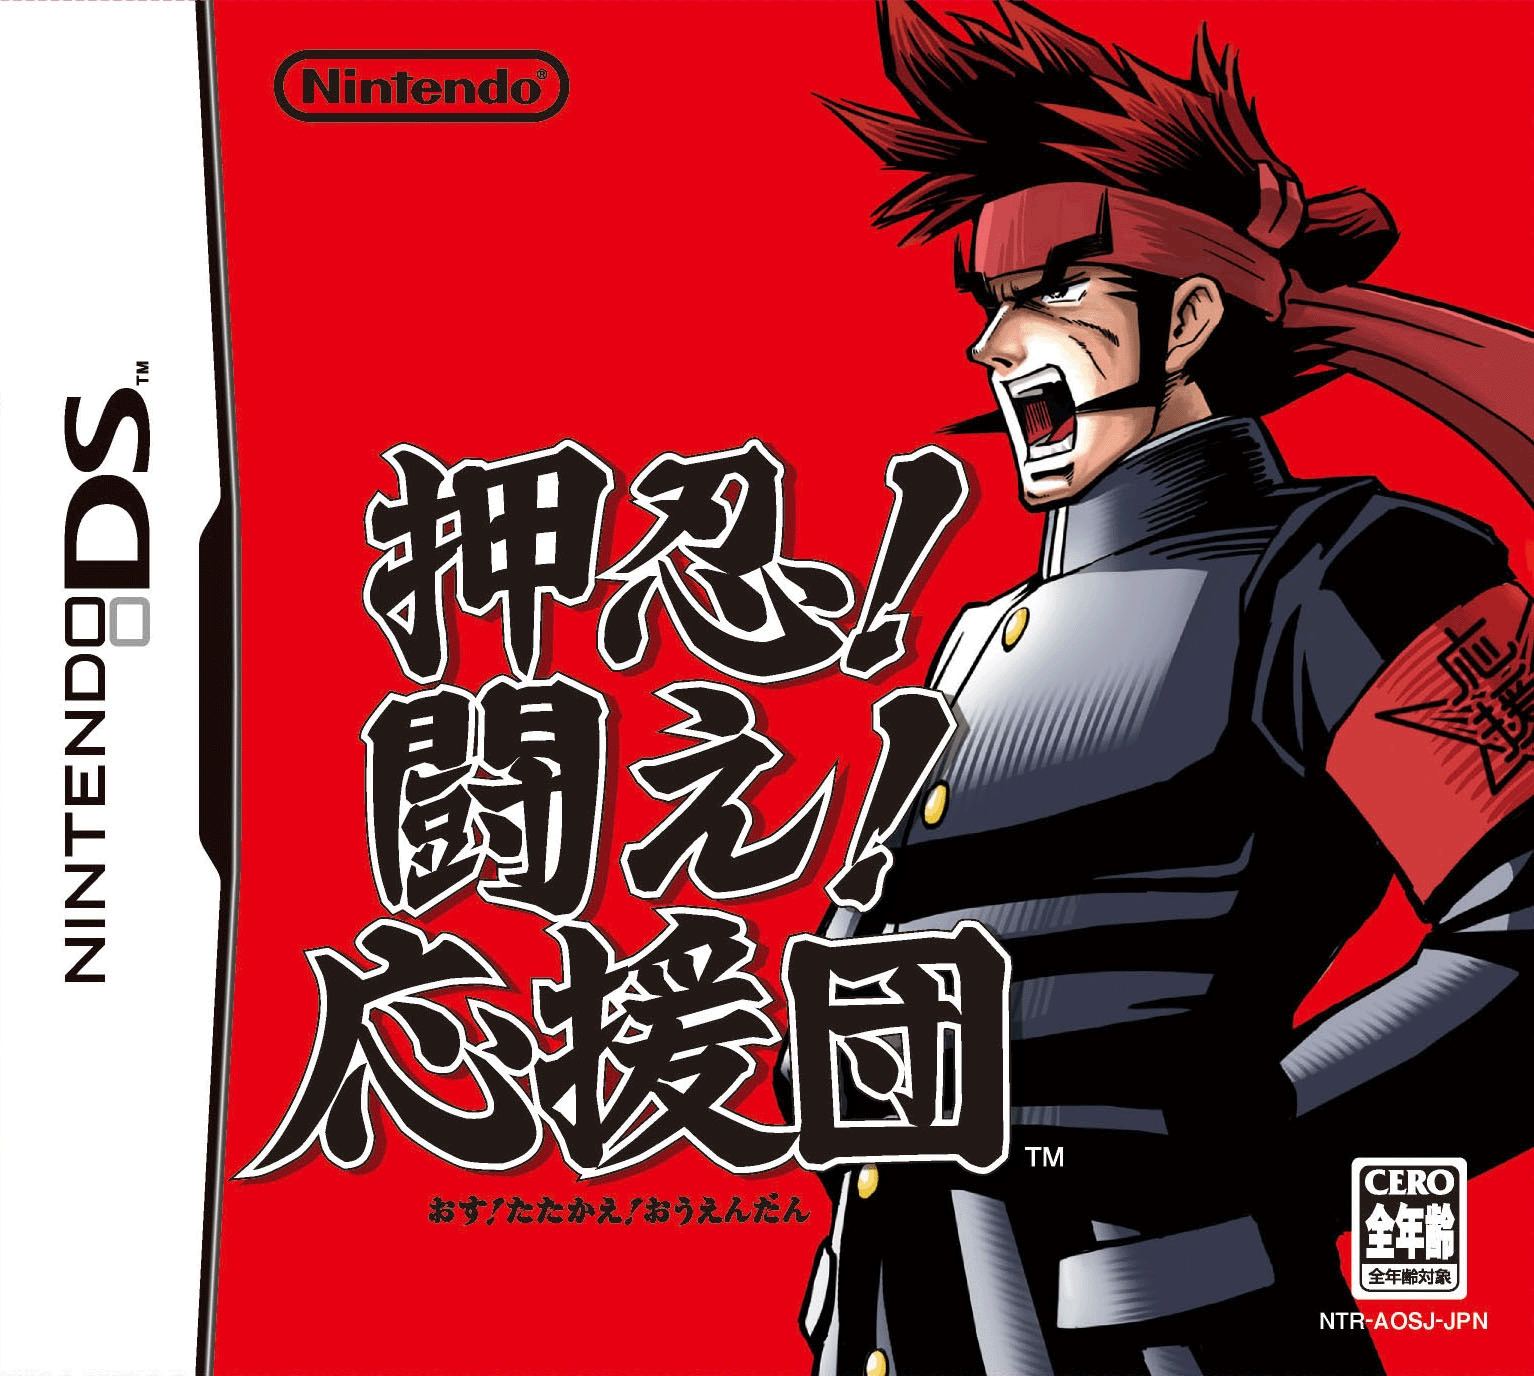 [Análise Retro Game] - Trilogia Osu 3/3 - Nintendo DS/3DS PA.33803.002